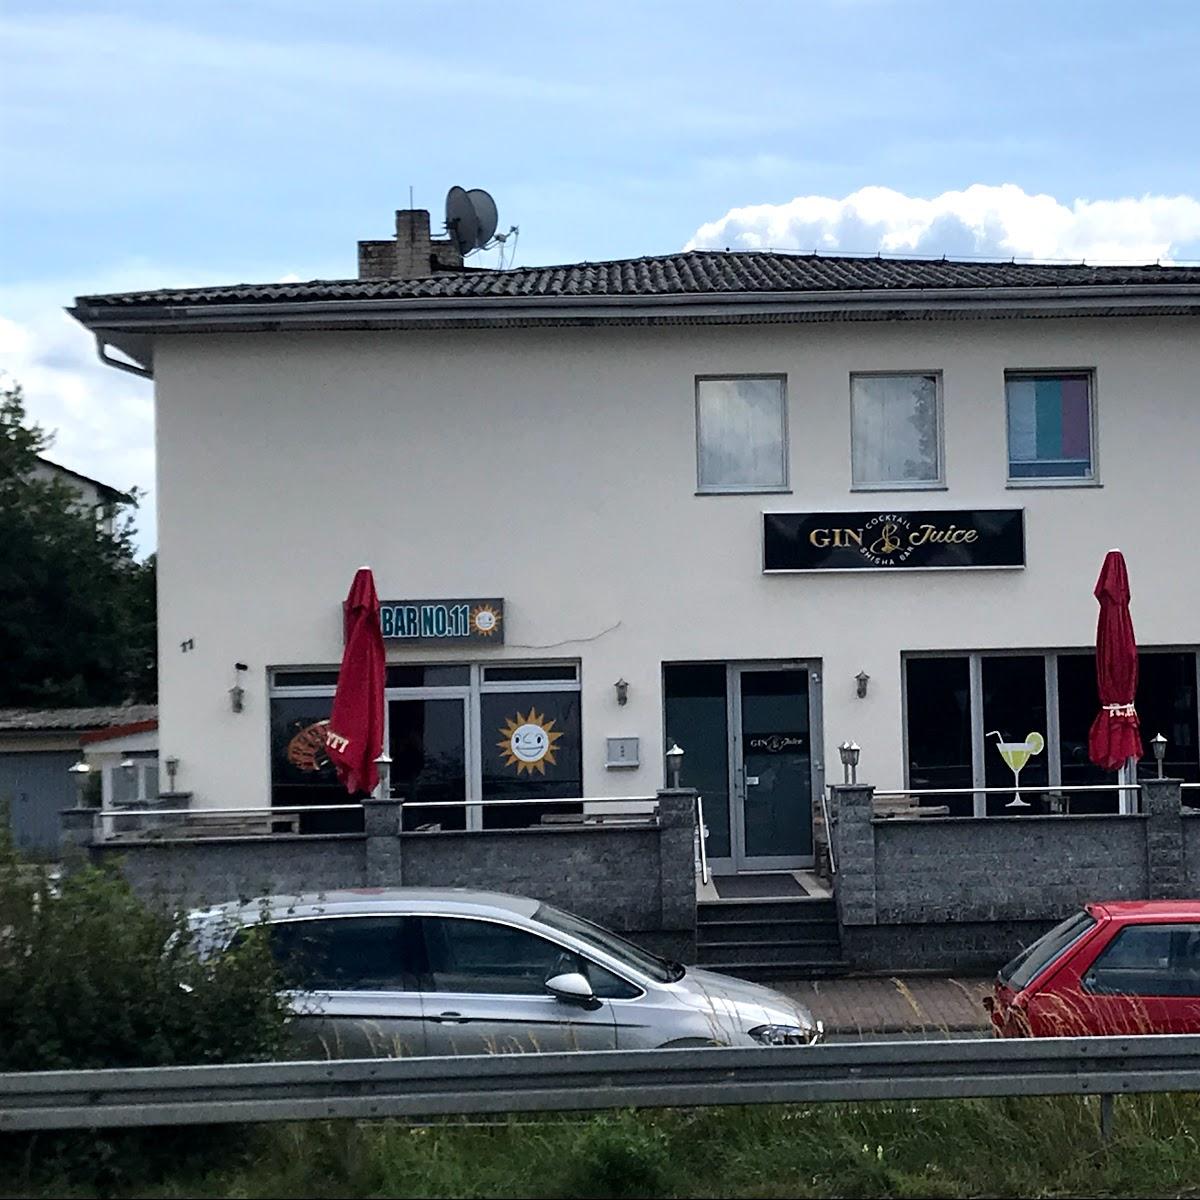 Restaurant "Cafe Goal" in Erlensee